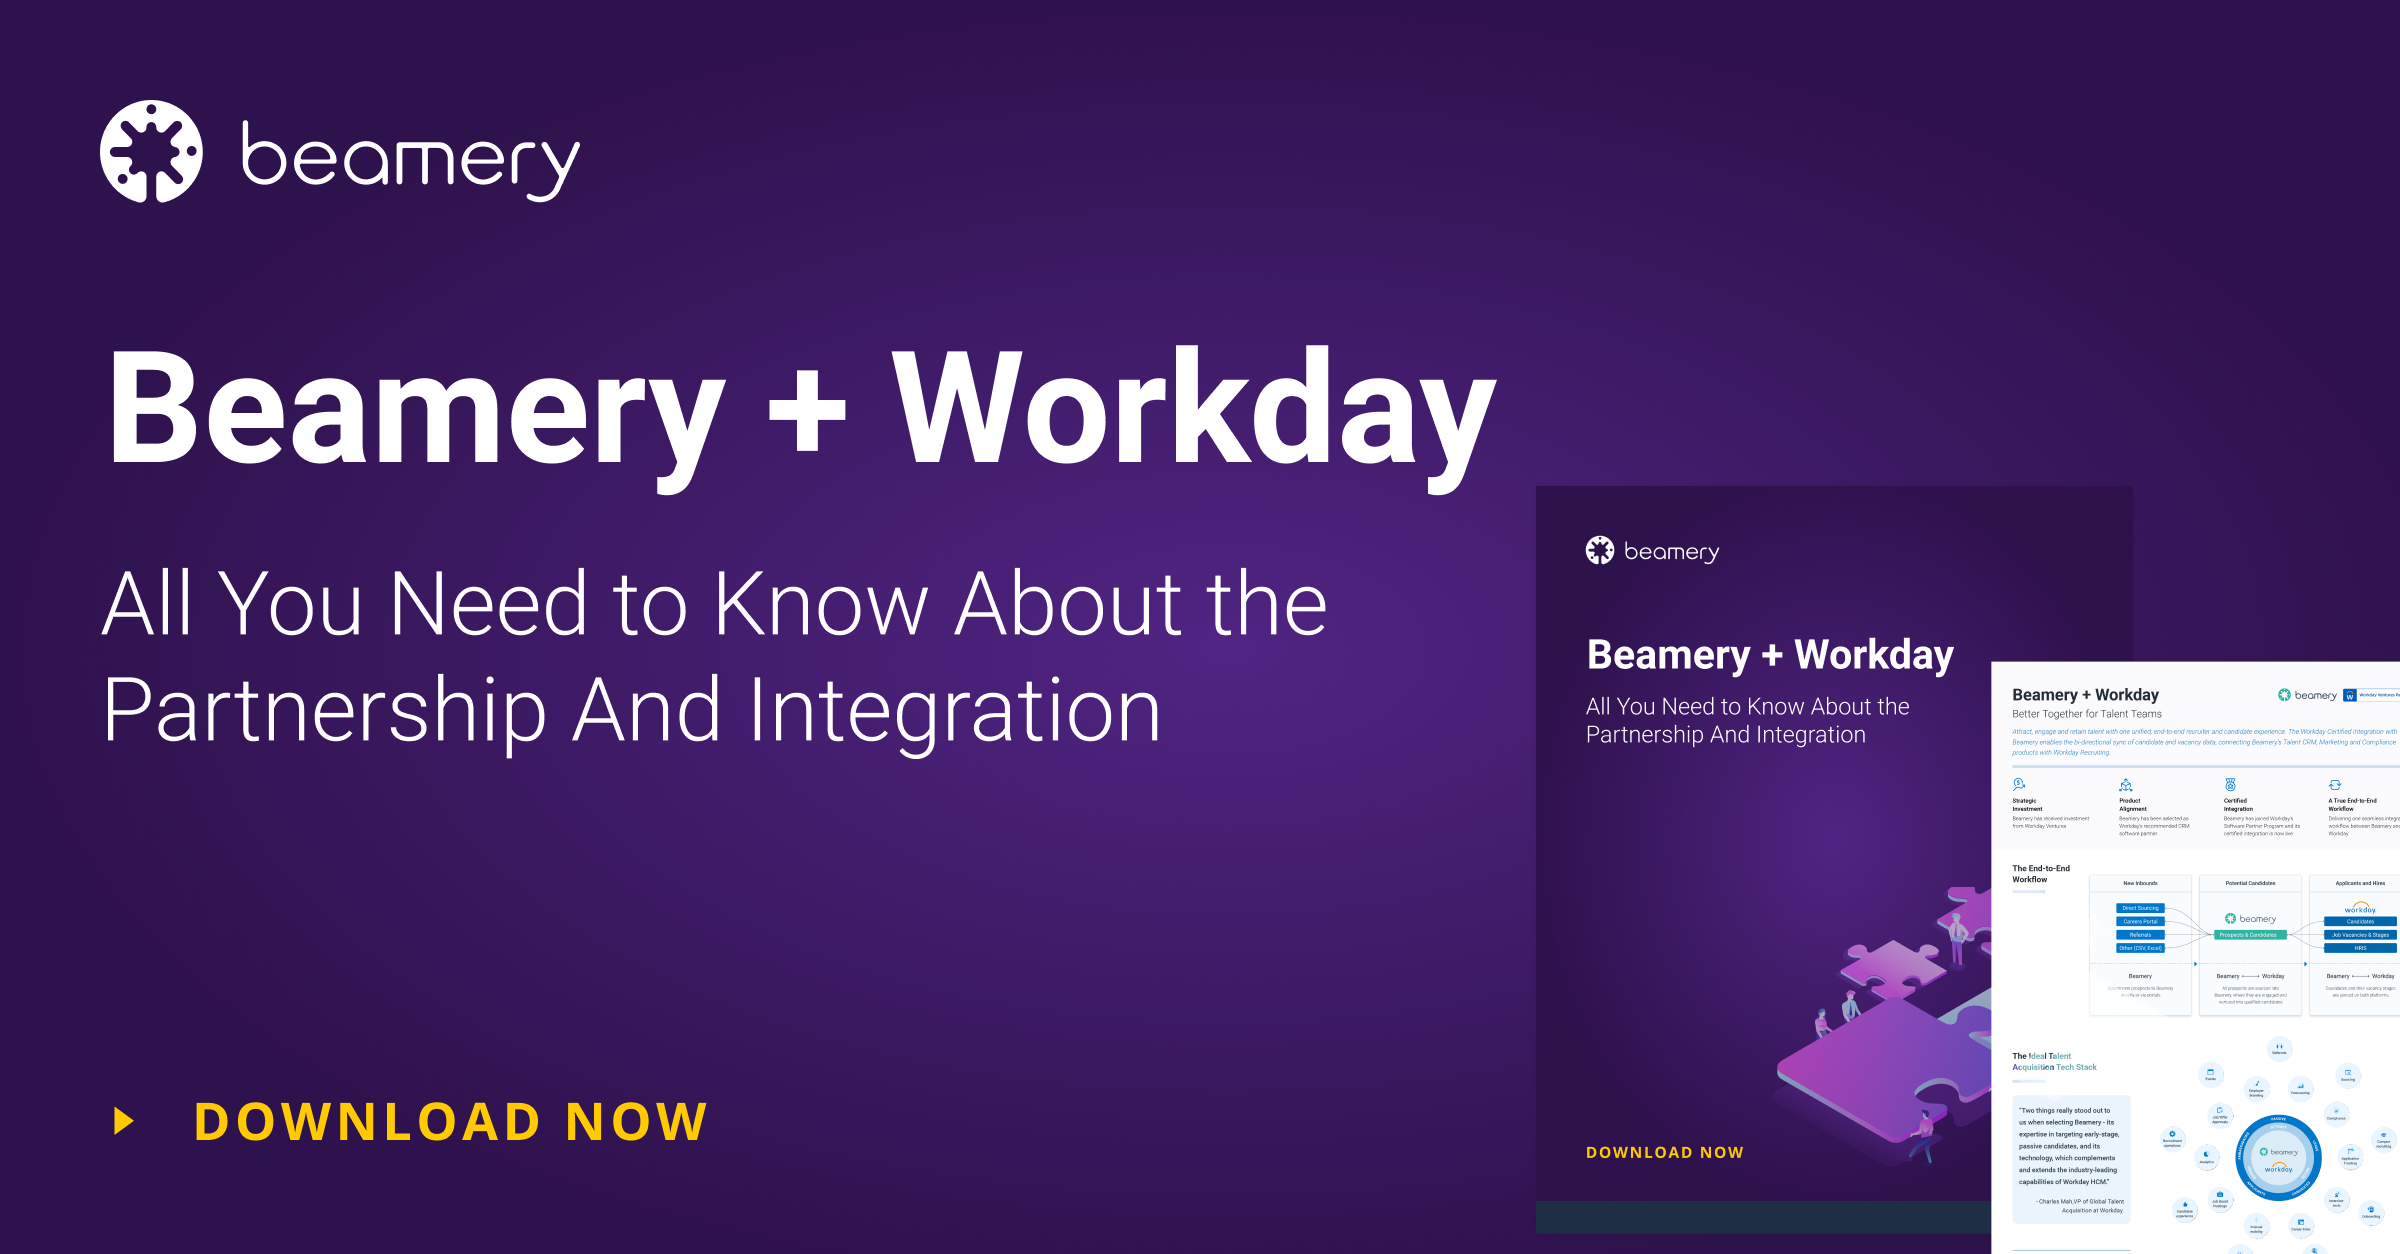 Beamery + Workday Linkedin 1.1 (2)